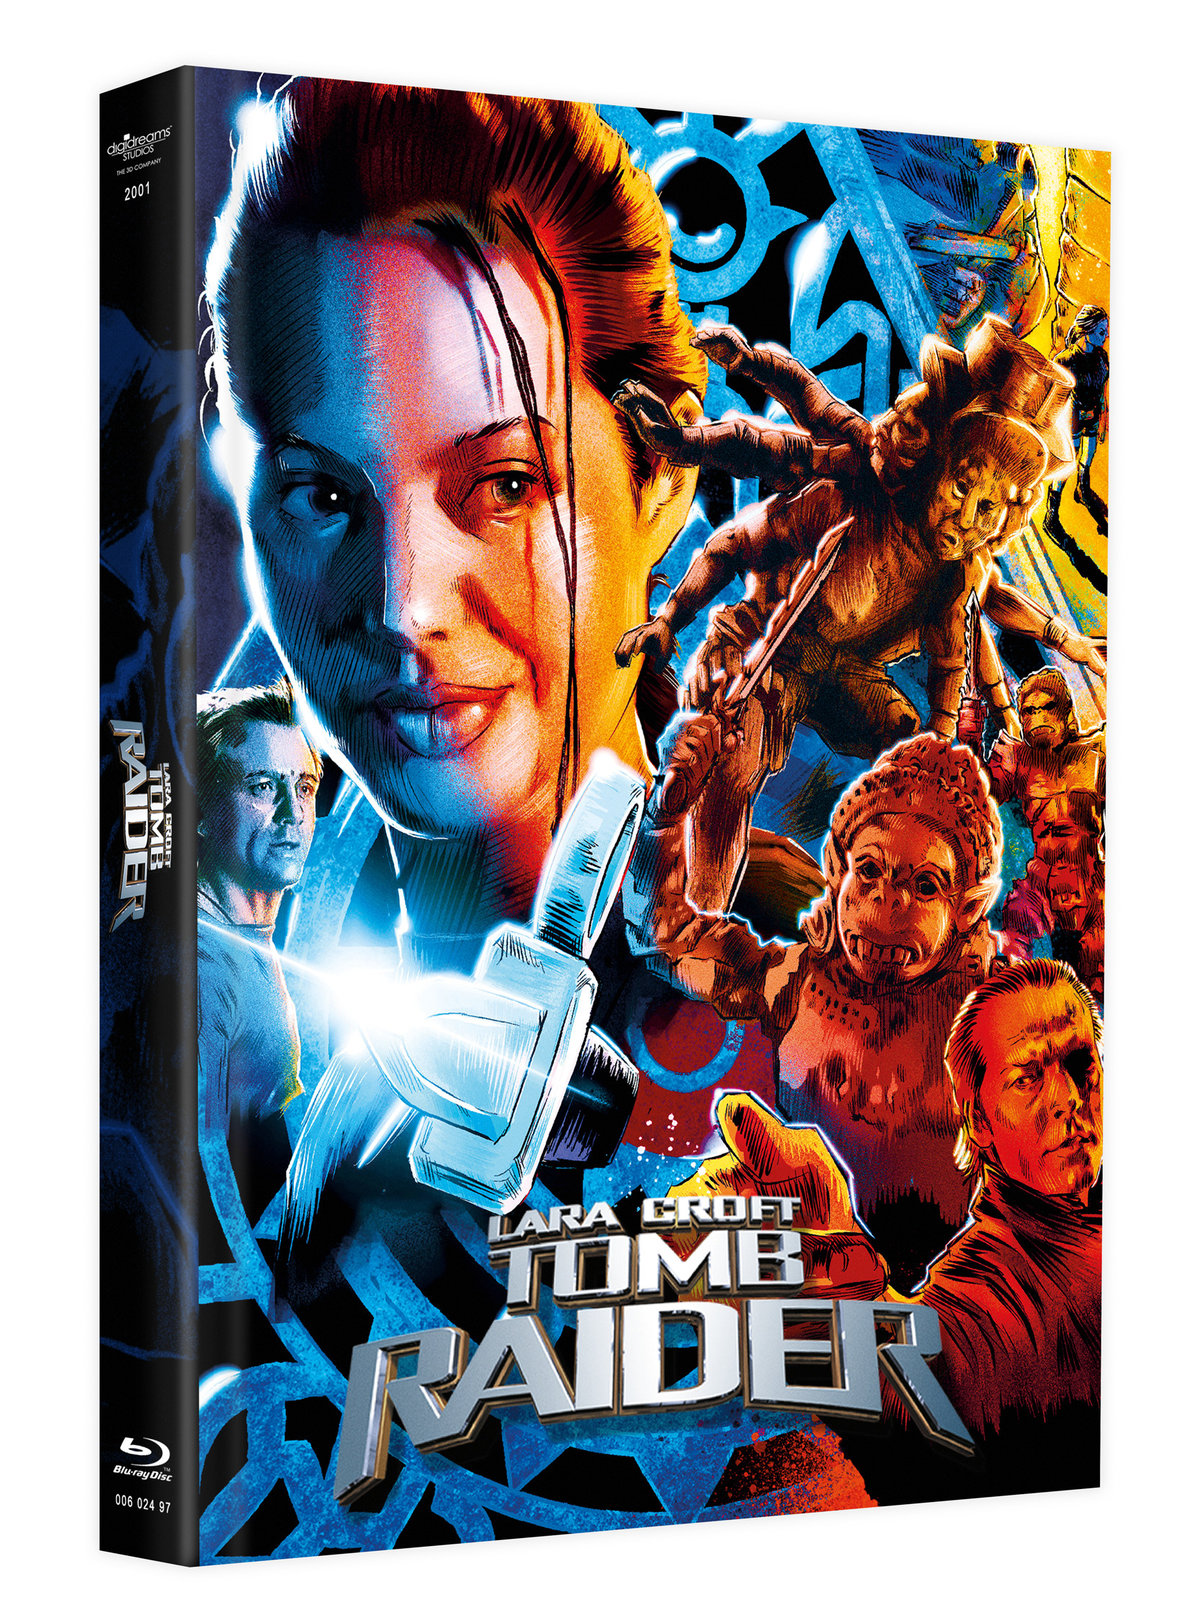 Tomb Raider - Uncut Mediabook Edition (DVD+blu-ray) (B)